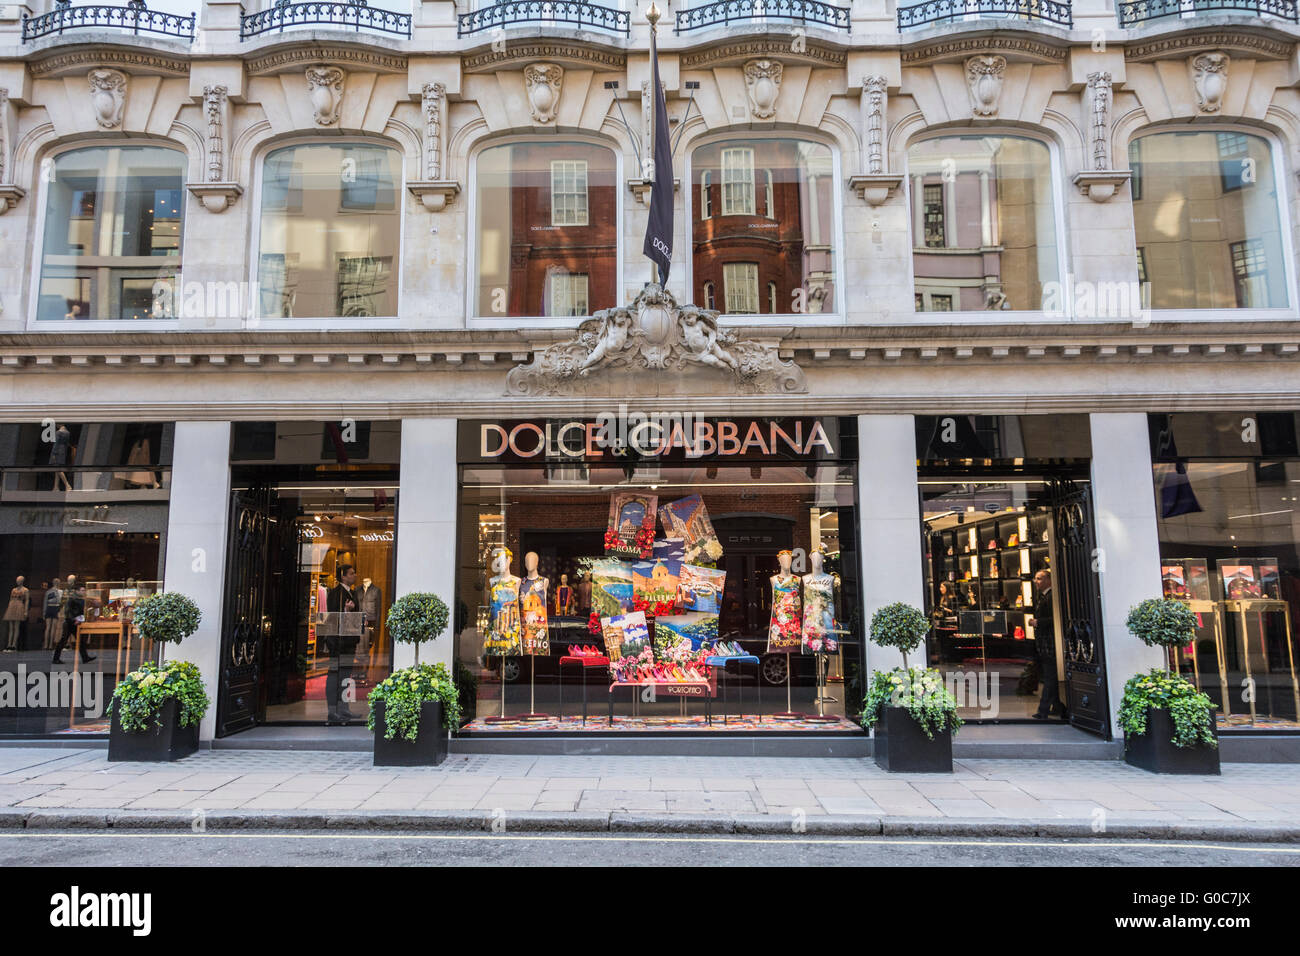 The Dolce \u0026 Gabbana store on Old Bond 